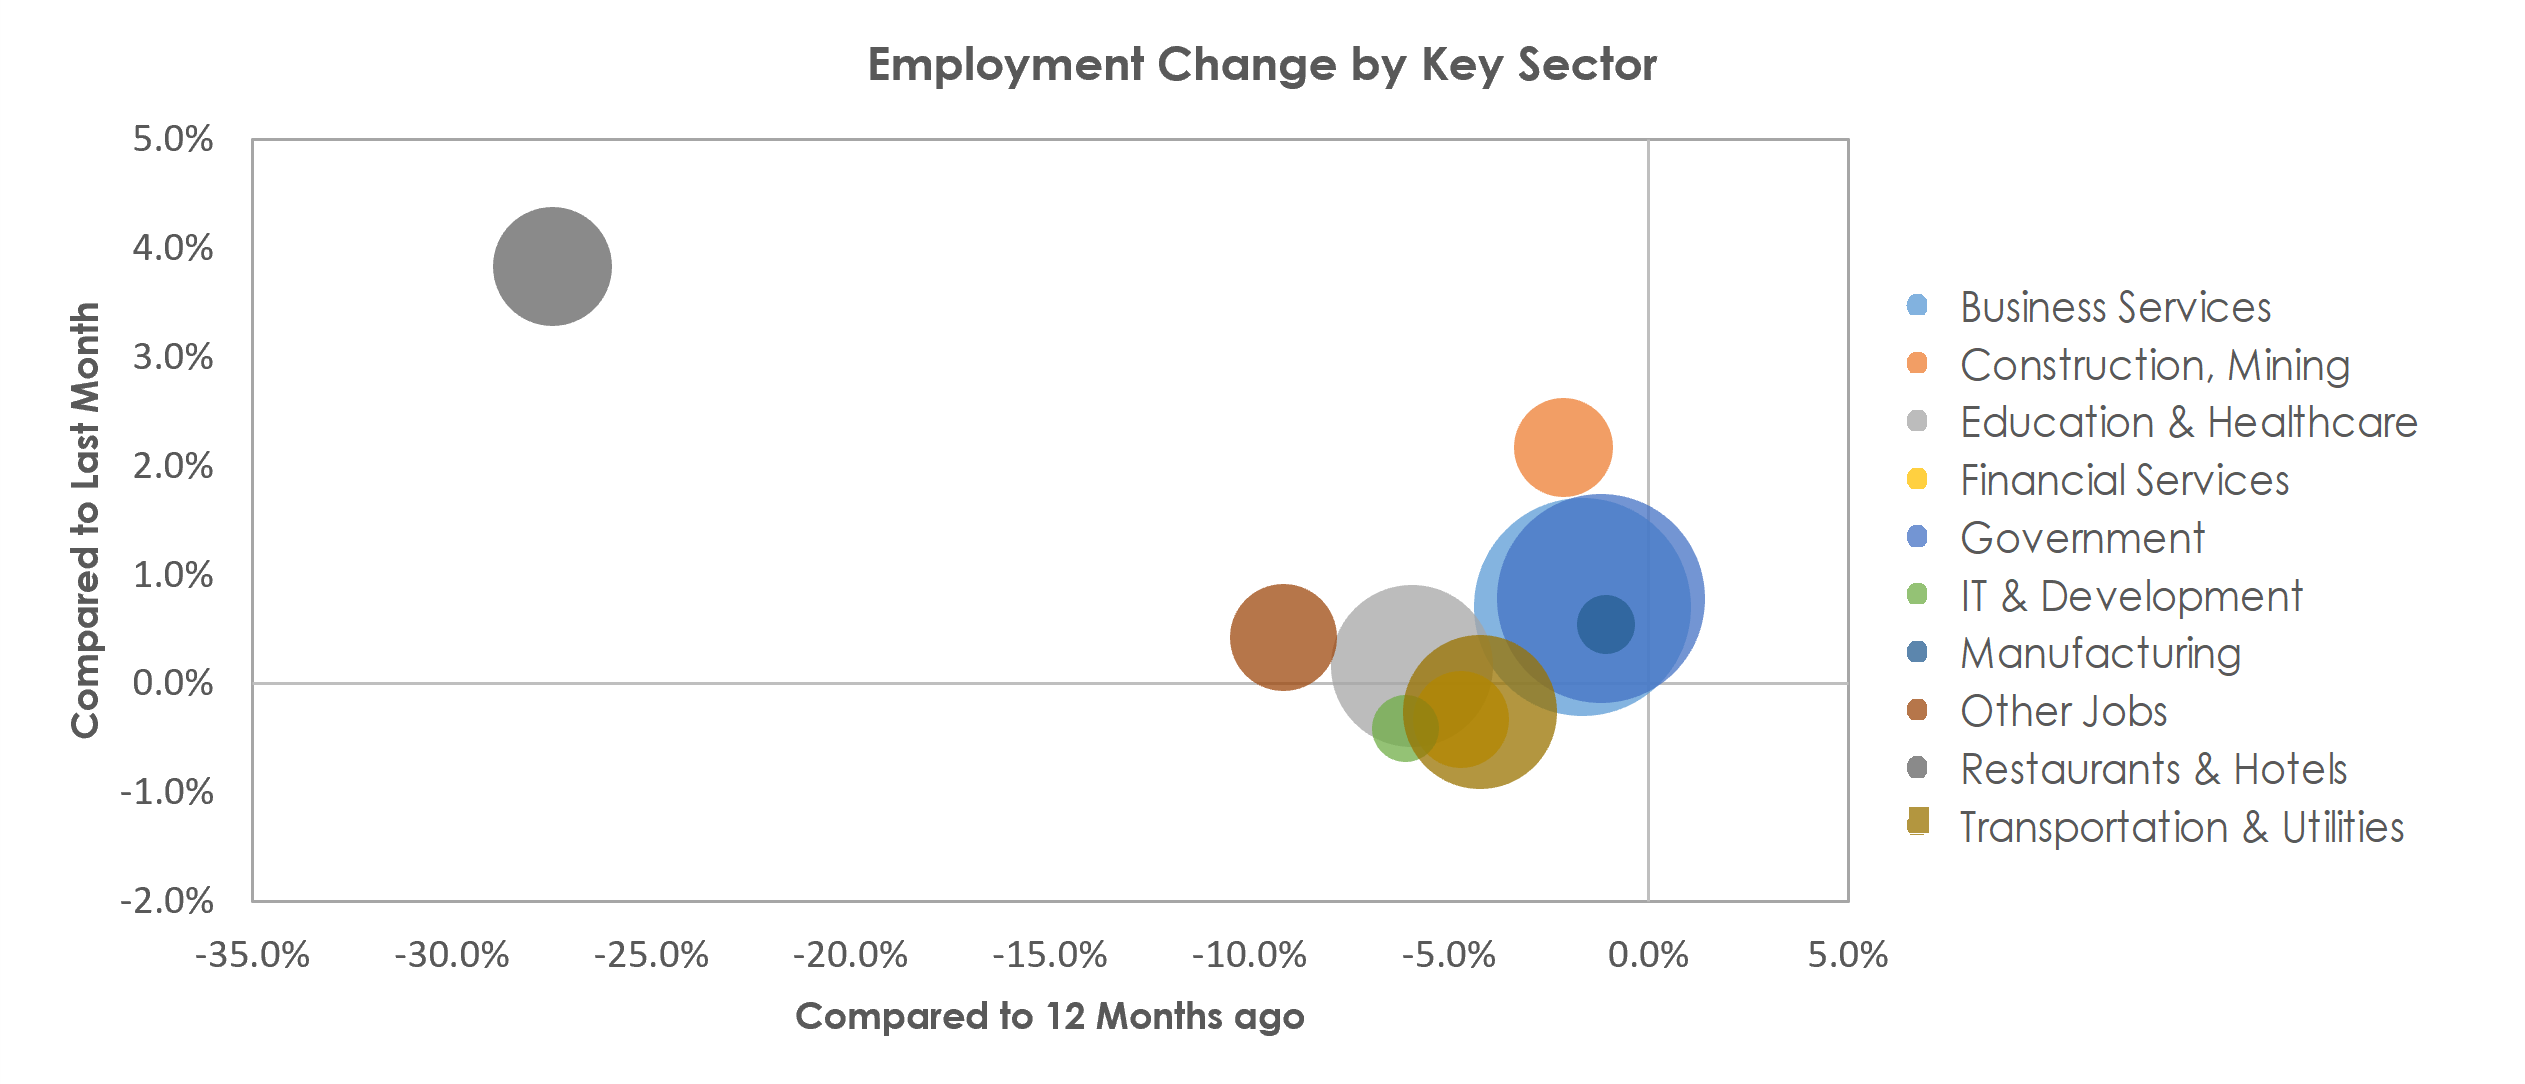 Washington-Arlington-Alexandria, DC-VA-MD-WV Unemployment by Industry March 2021